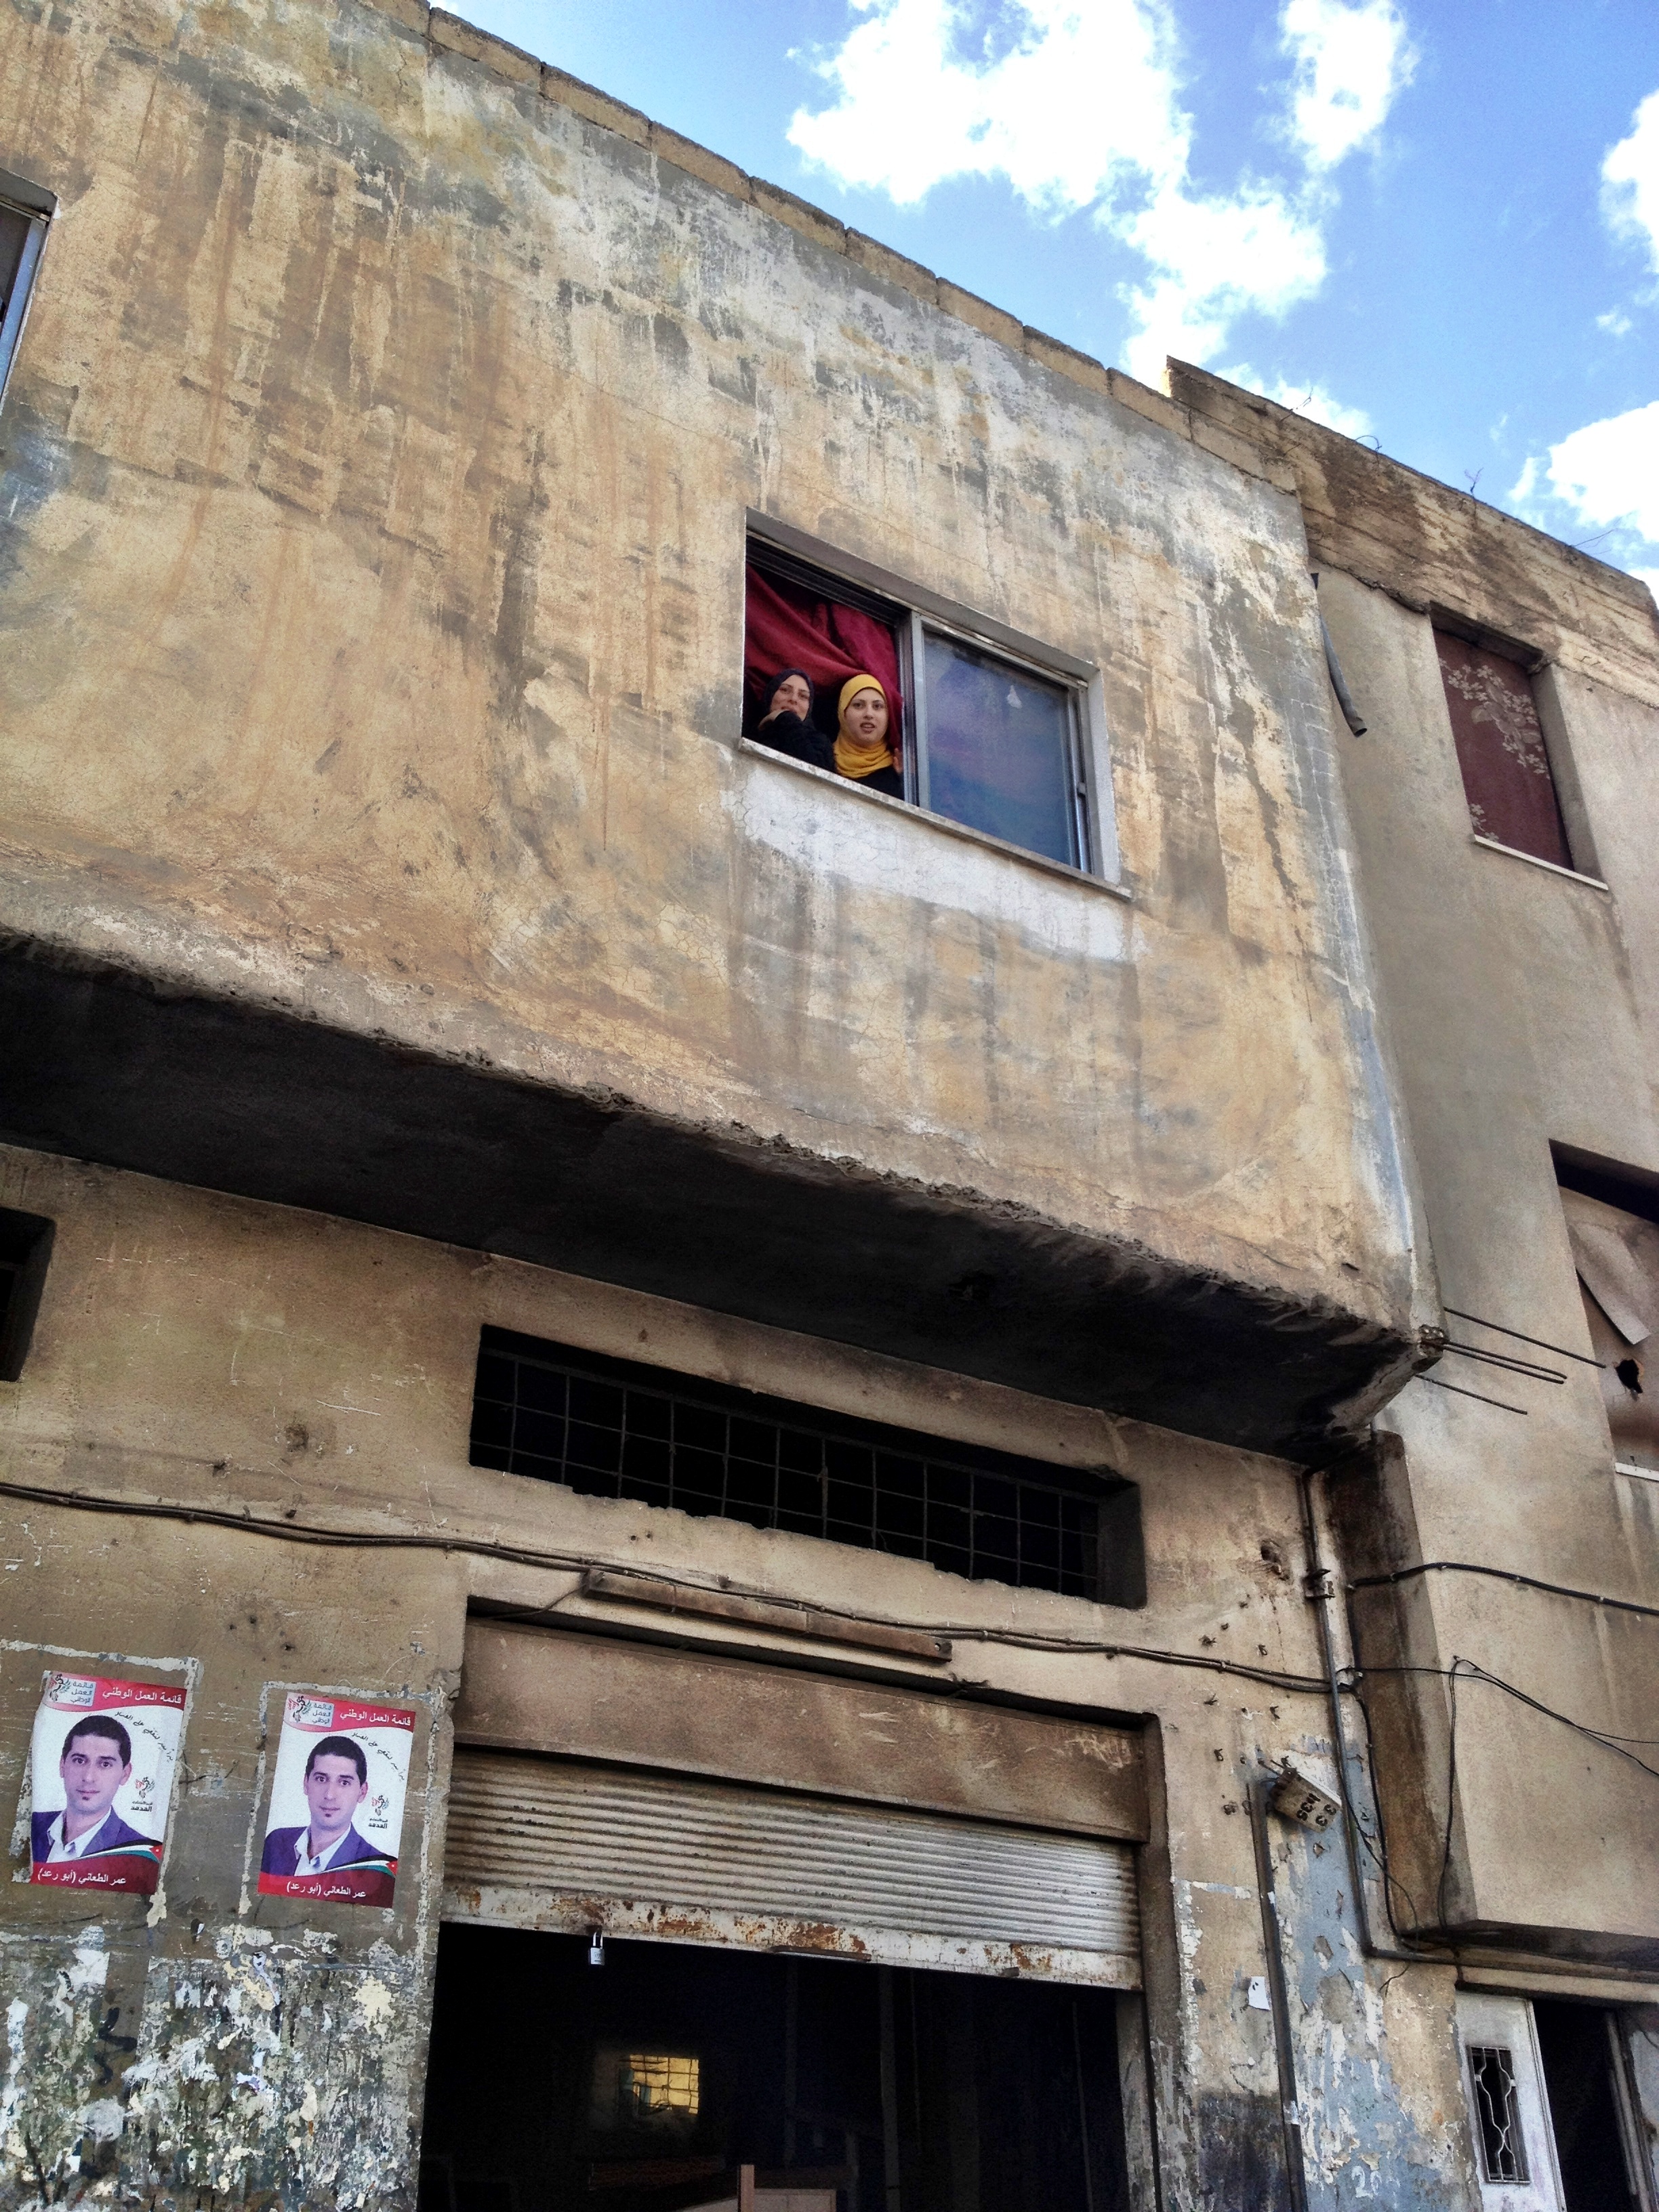 Jordan's hidden urban Syrian refugees